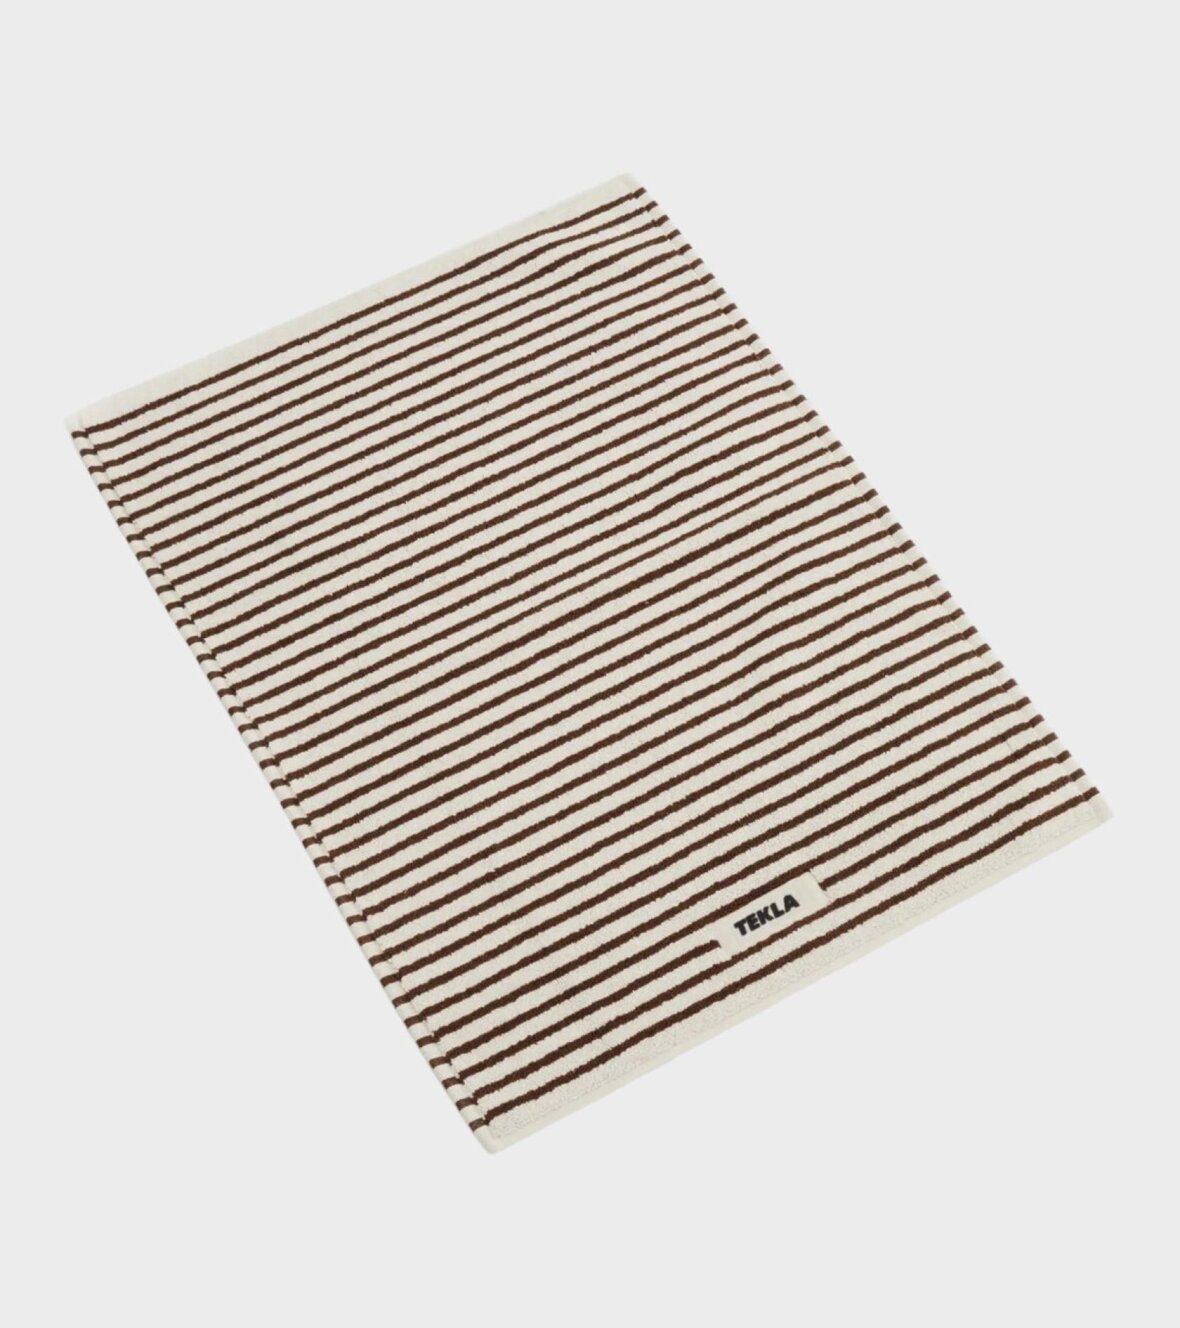 https://www.dr-adams.dk/shared/100/277/tekla-bath-mat-50x70-kodiak-stripes_1180w.jpg